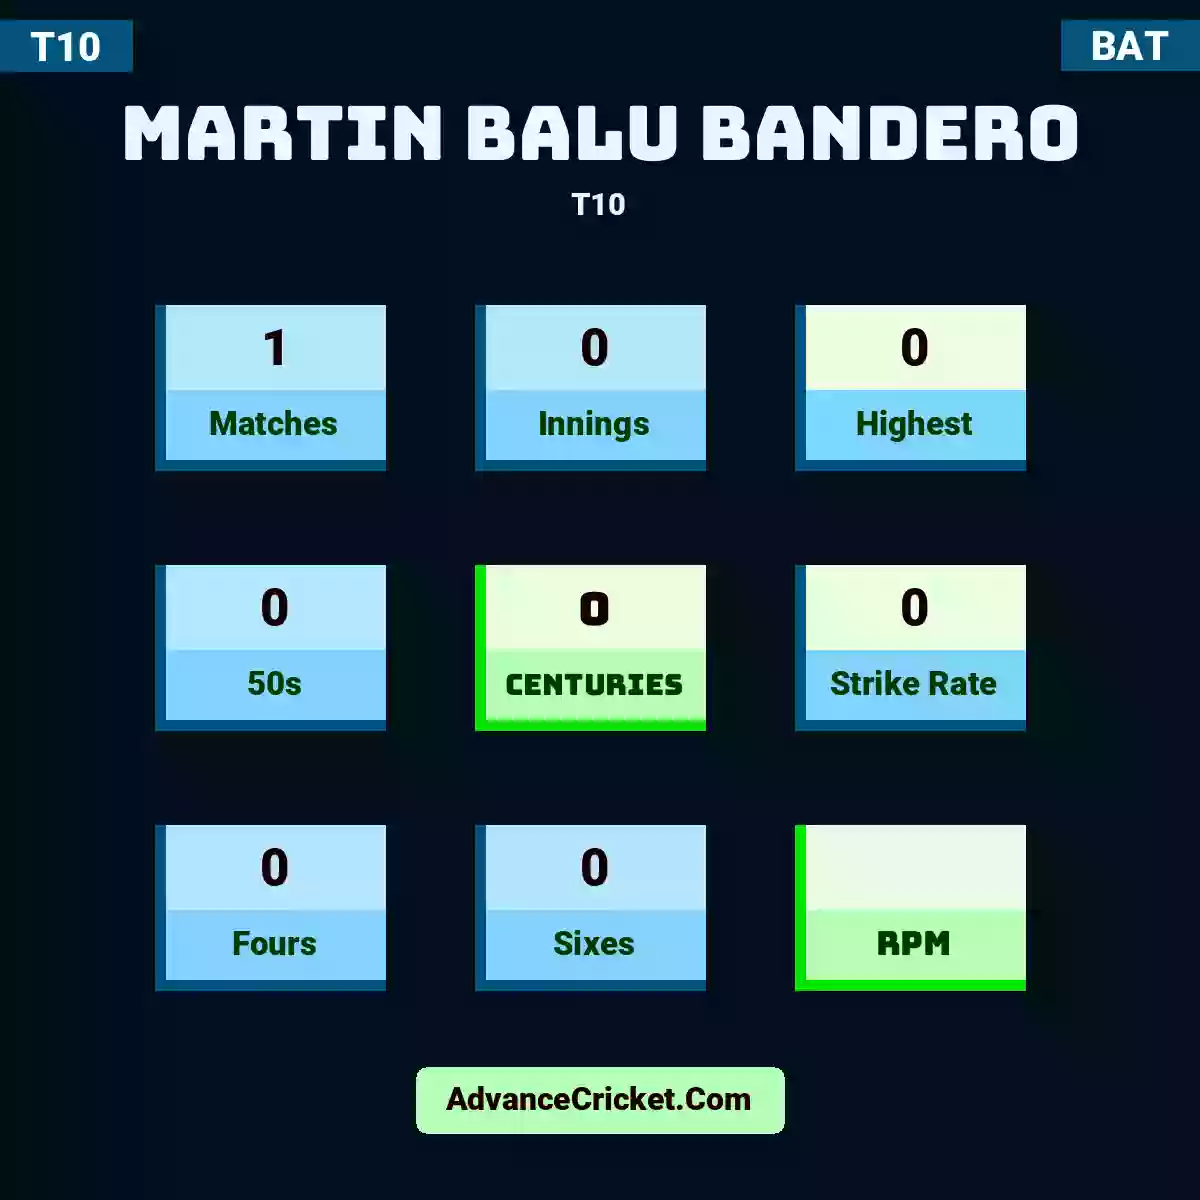 Martin Balu Bandero T10 , Martin Balu Bandero played 1 matches, scored 0 runs as highest, 0 half-centuries, and 0 centuries, with a strike rate of 0. M.Balu.Bandero hit 0 fours and 0 sixes.